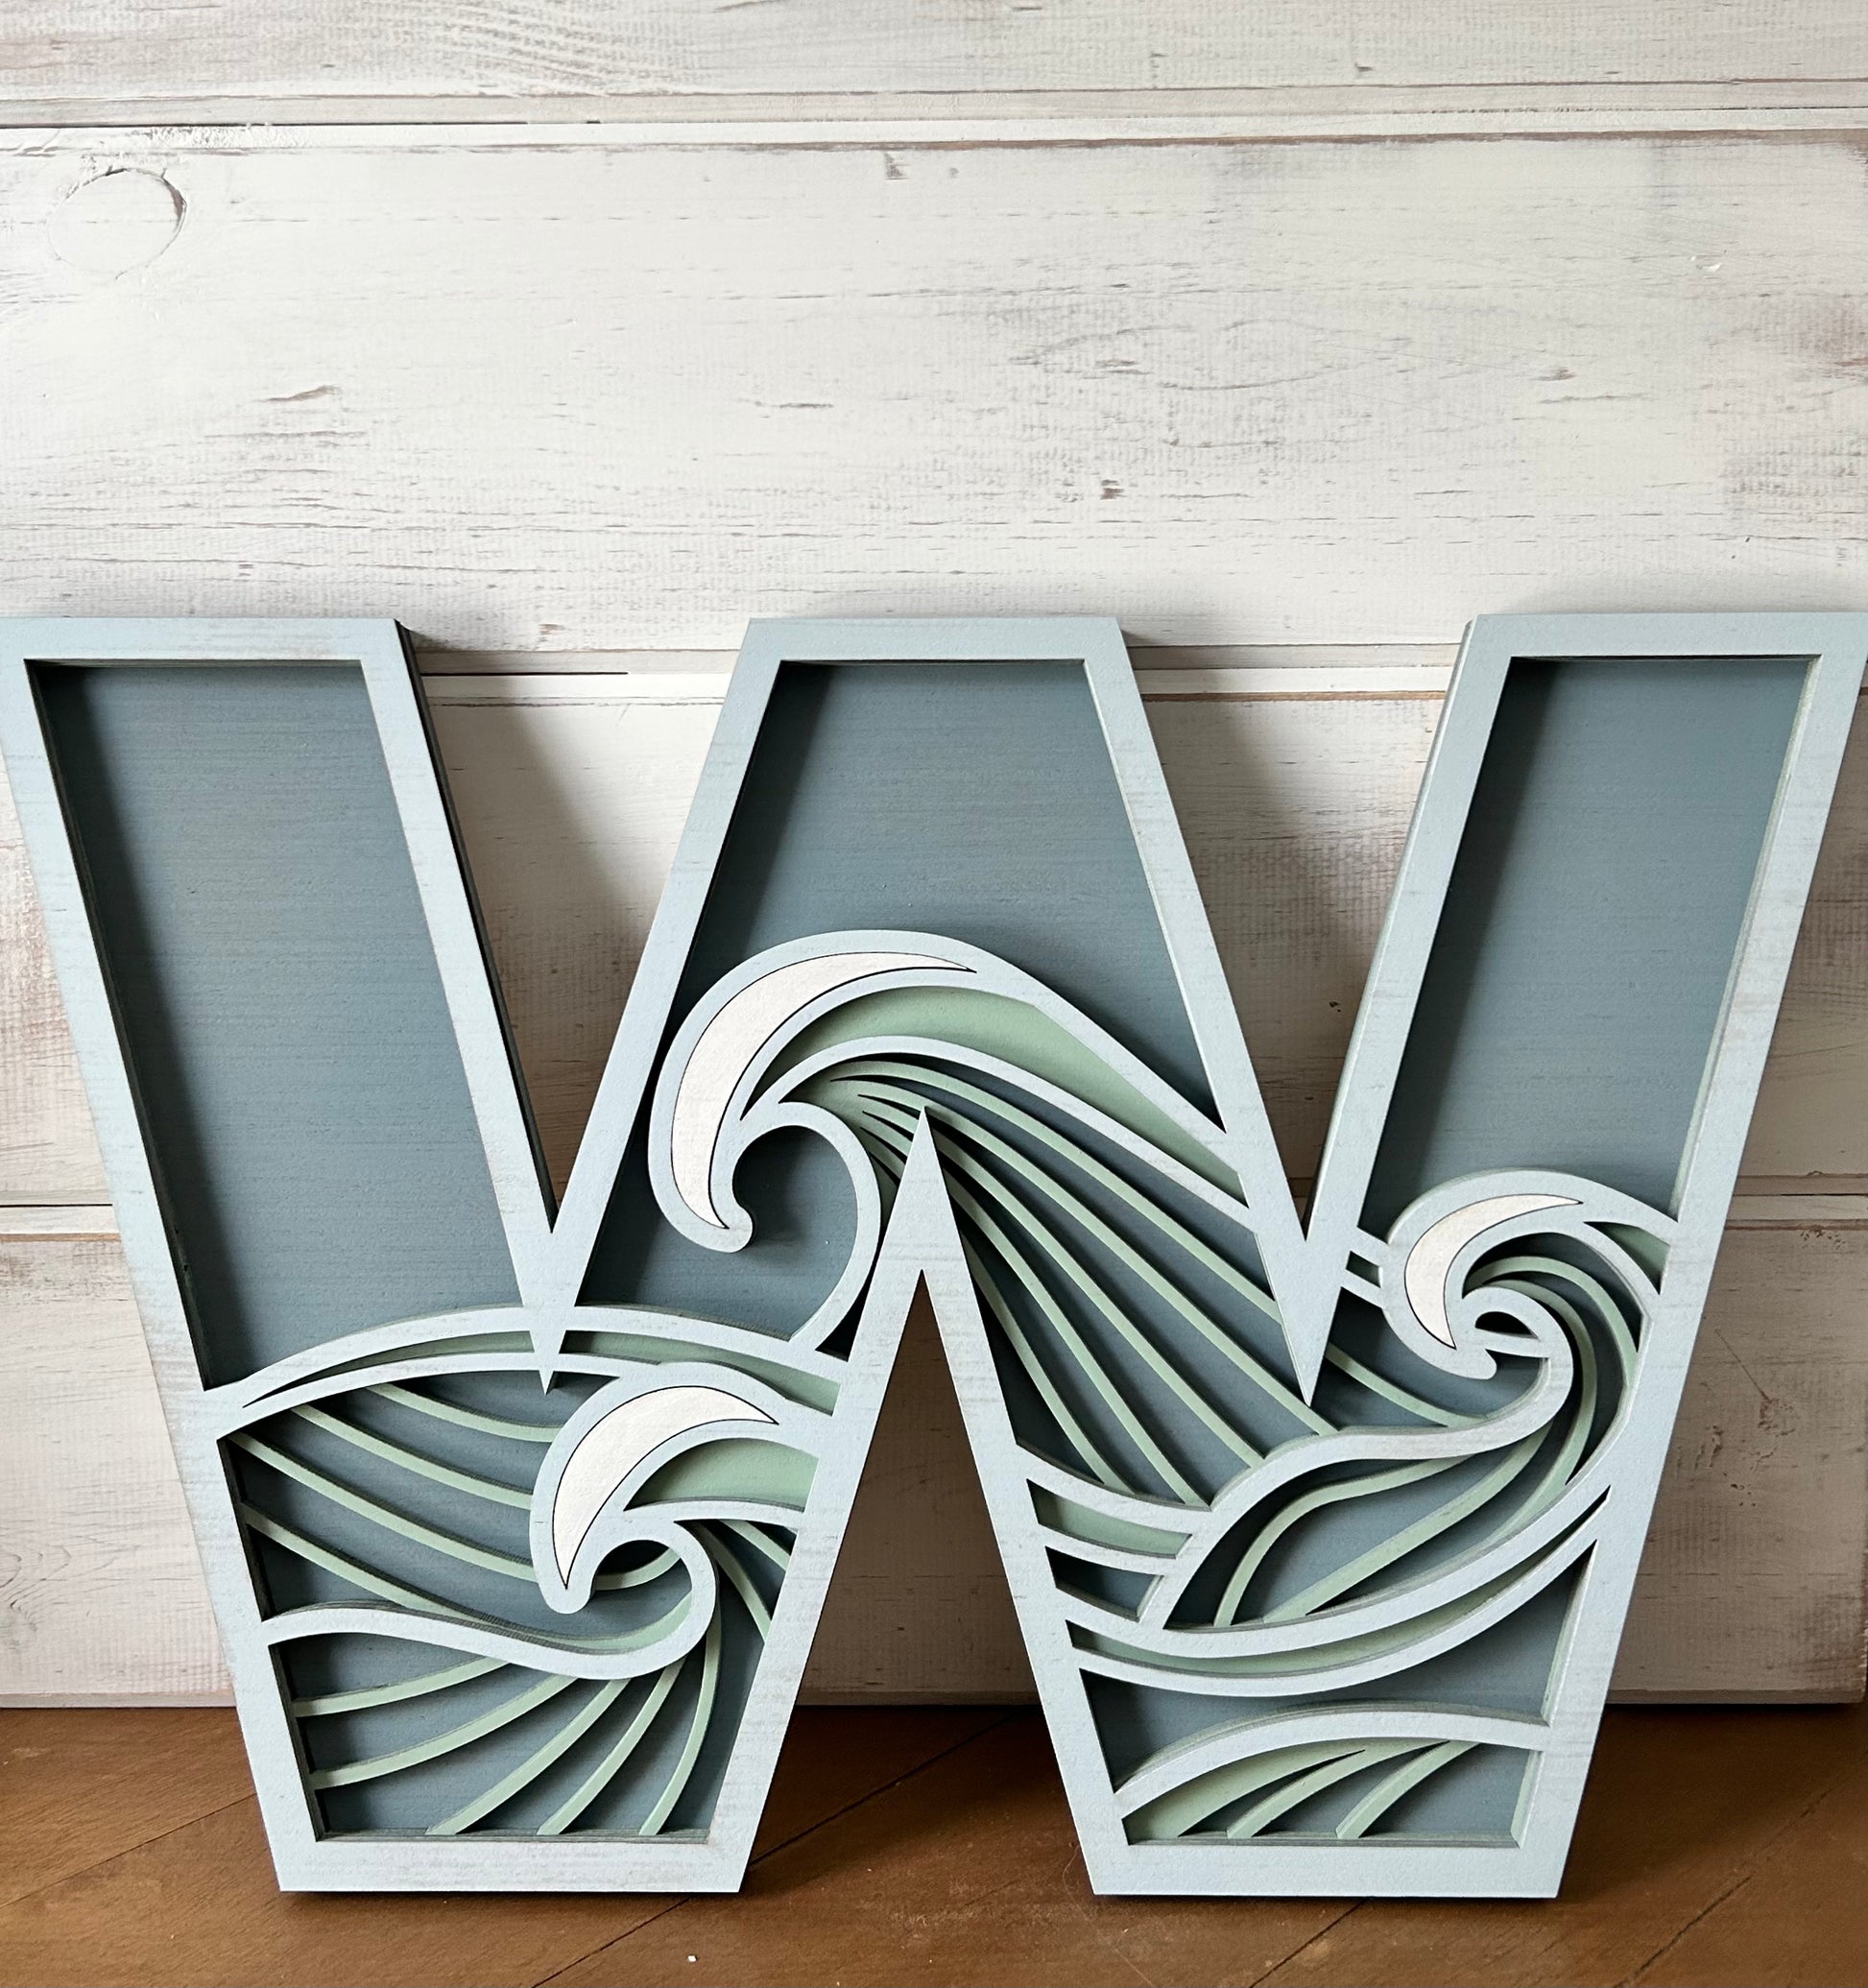 "W" layered wood decor